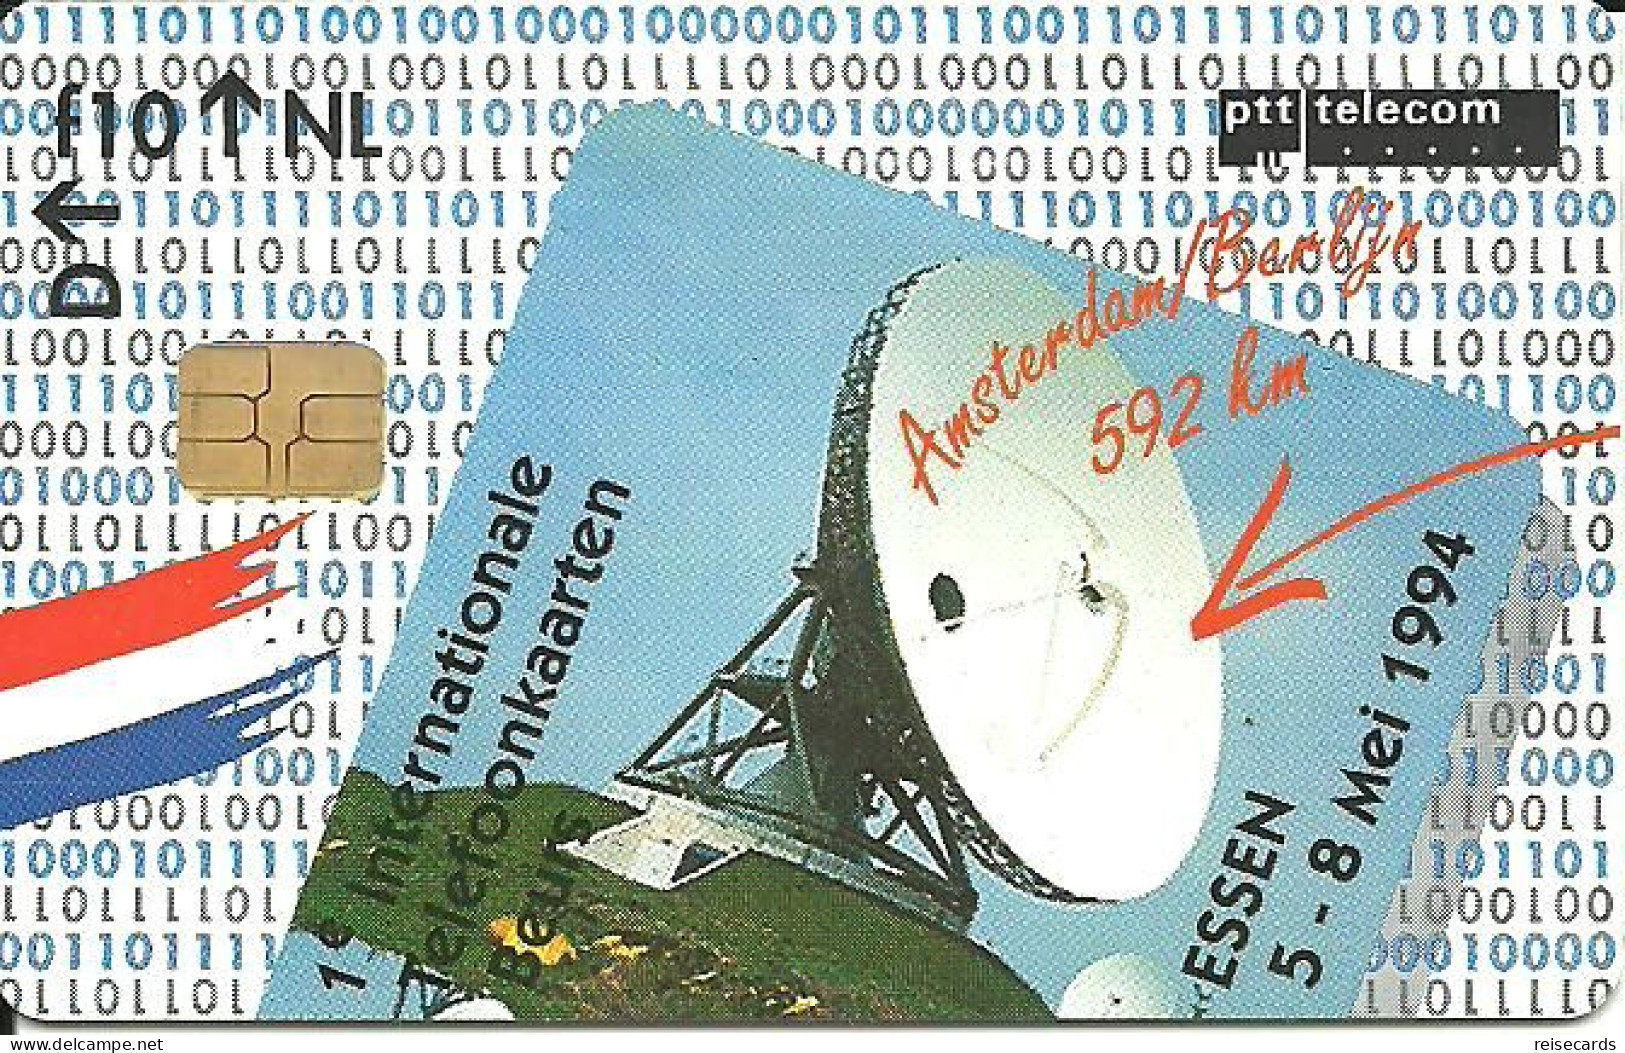 Netherlands: Ptt Telecom - 1994 1. Internationale Telefoonkaarten Beurs 94 Essen. Mint - Publiques